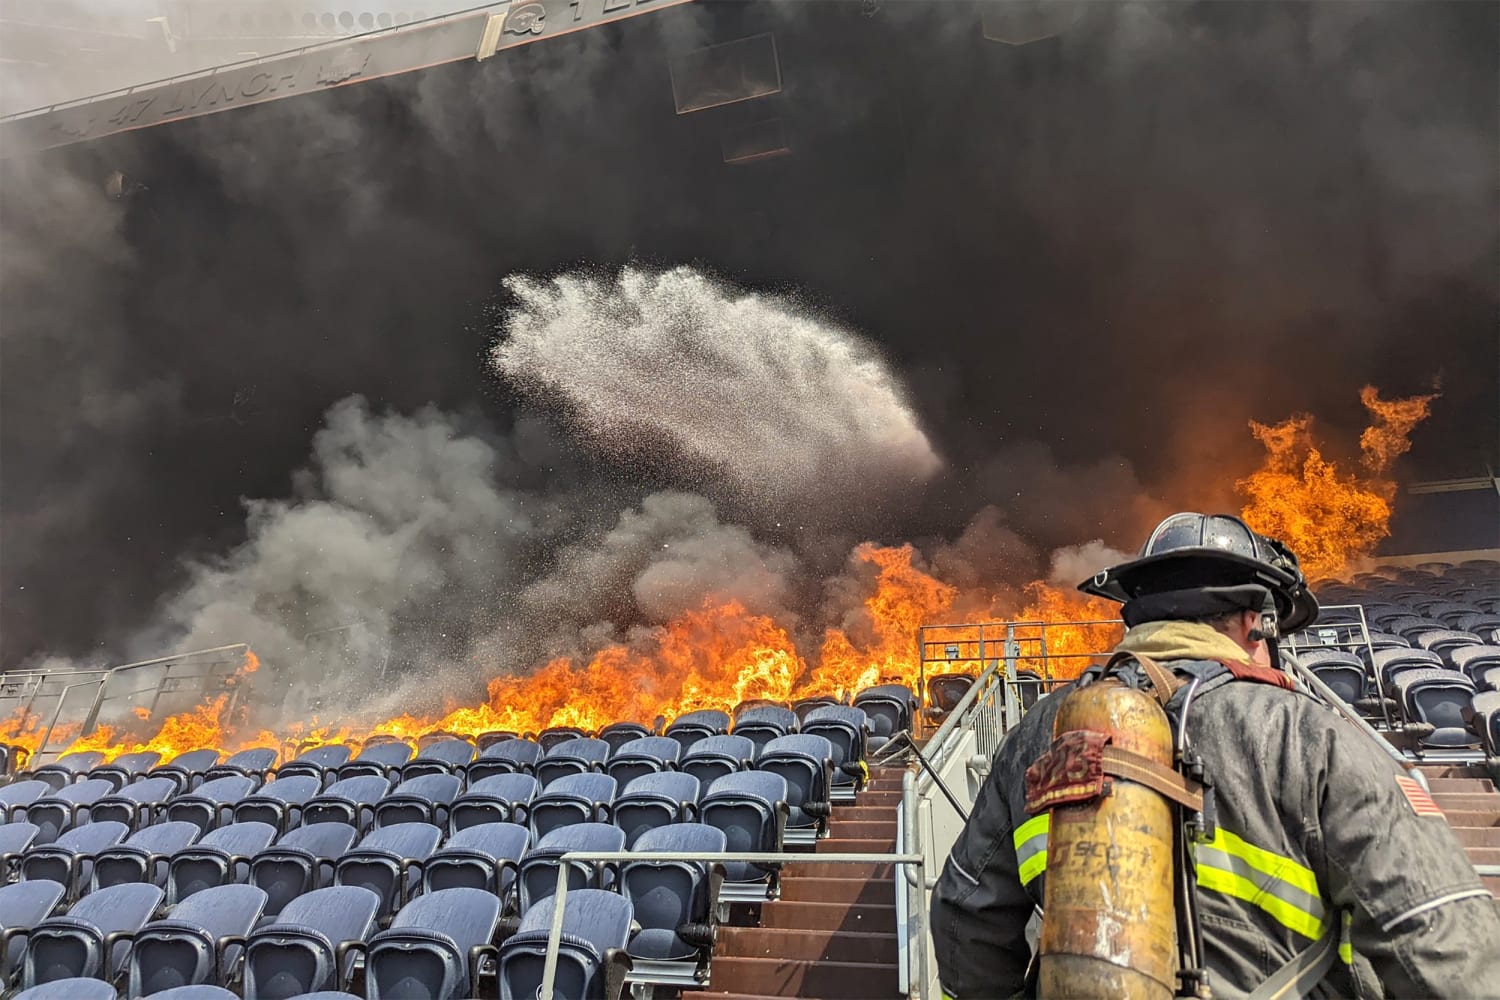 Dramatic images show fire erupting inside Denver's Mile High Stadium